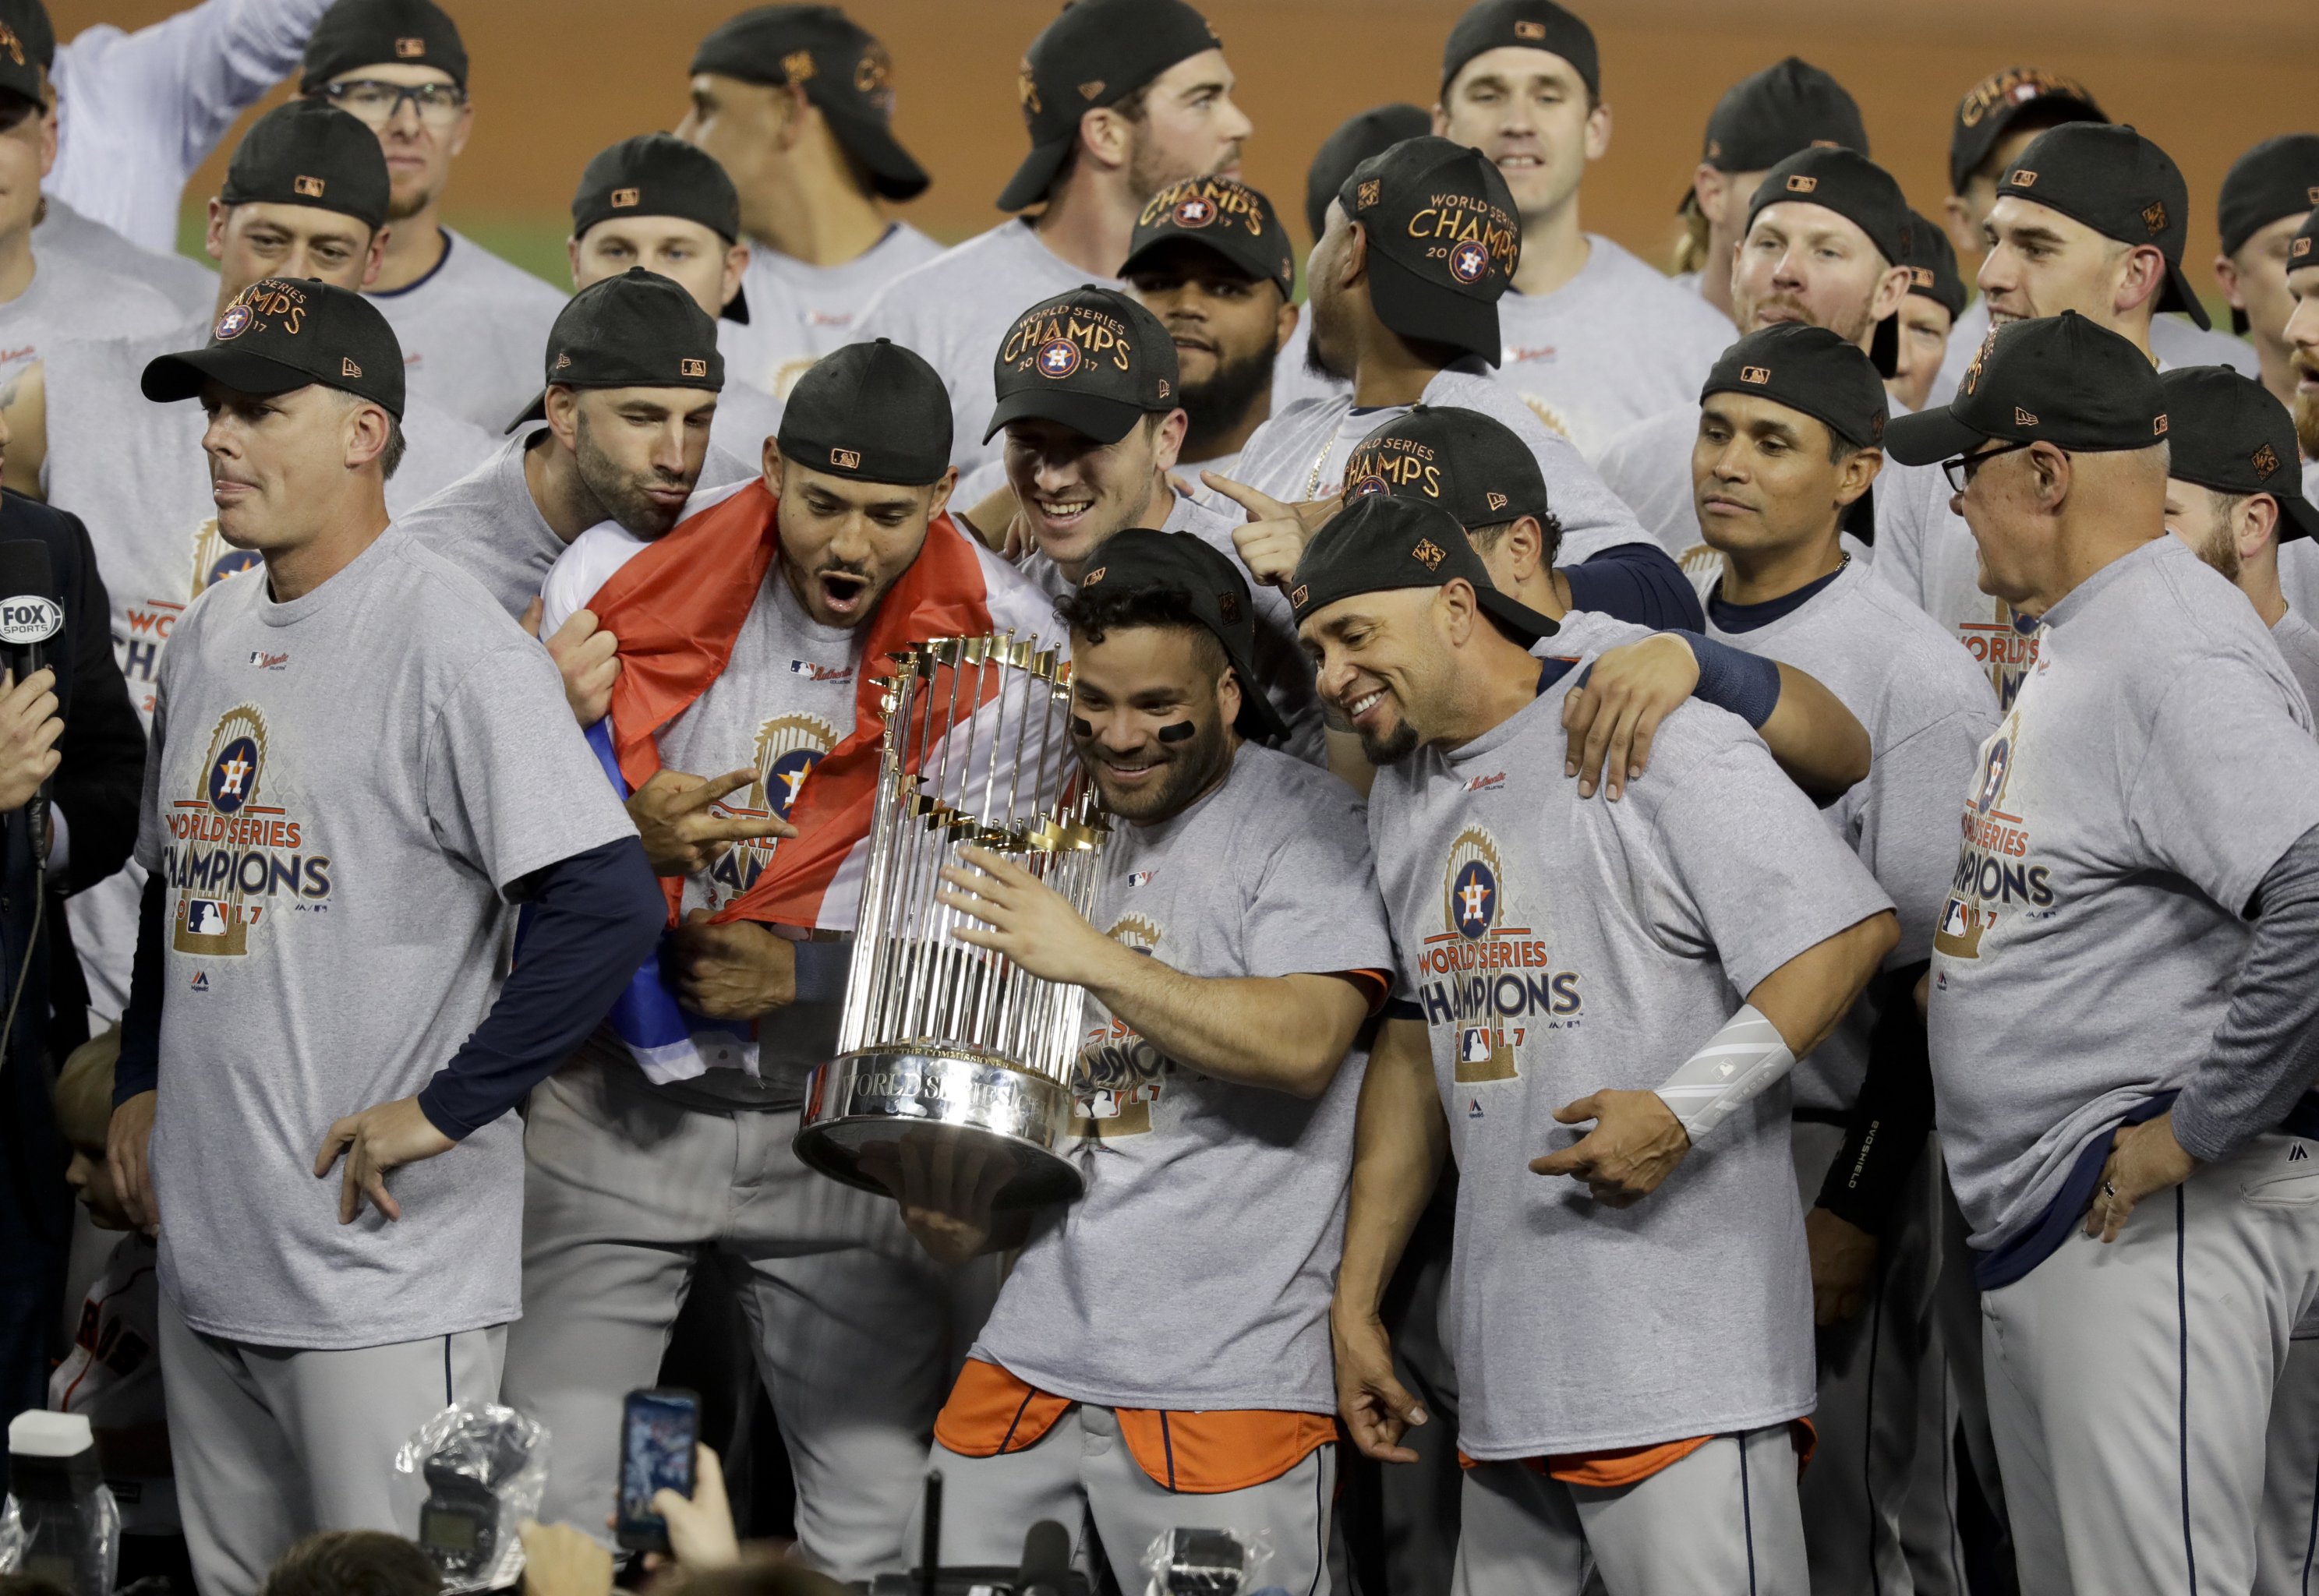 Major League melting pot: Closer look at Houston Astros' diverse